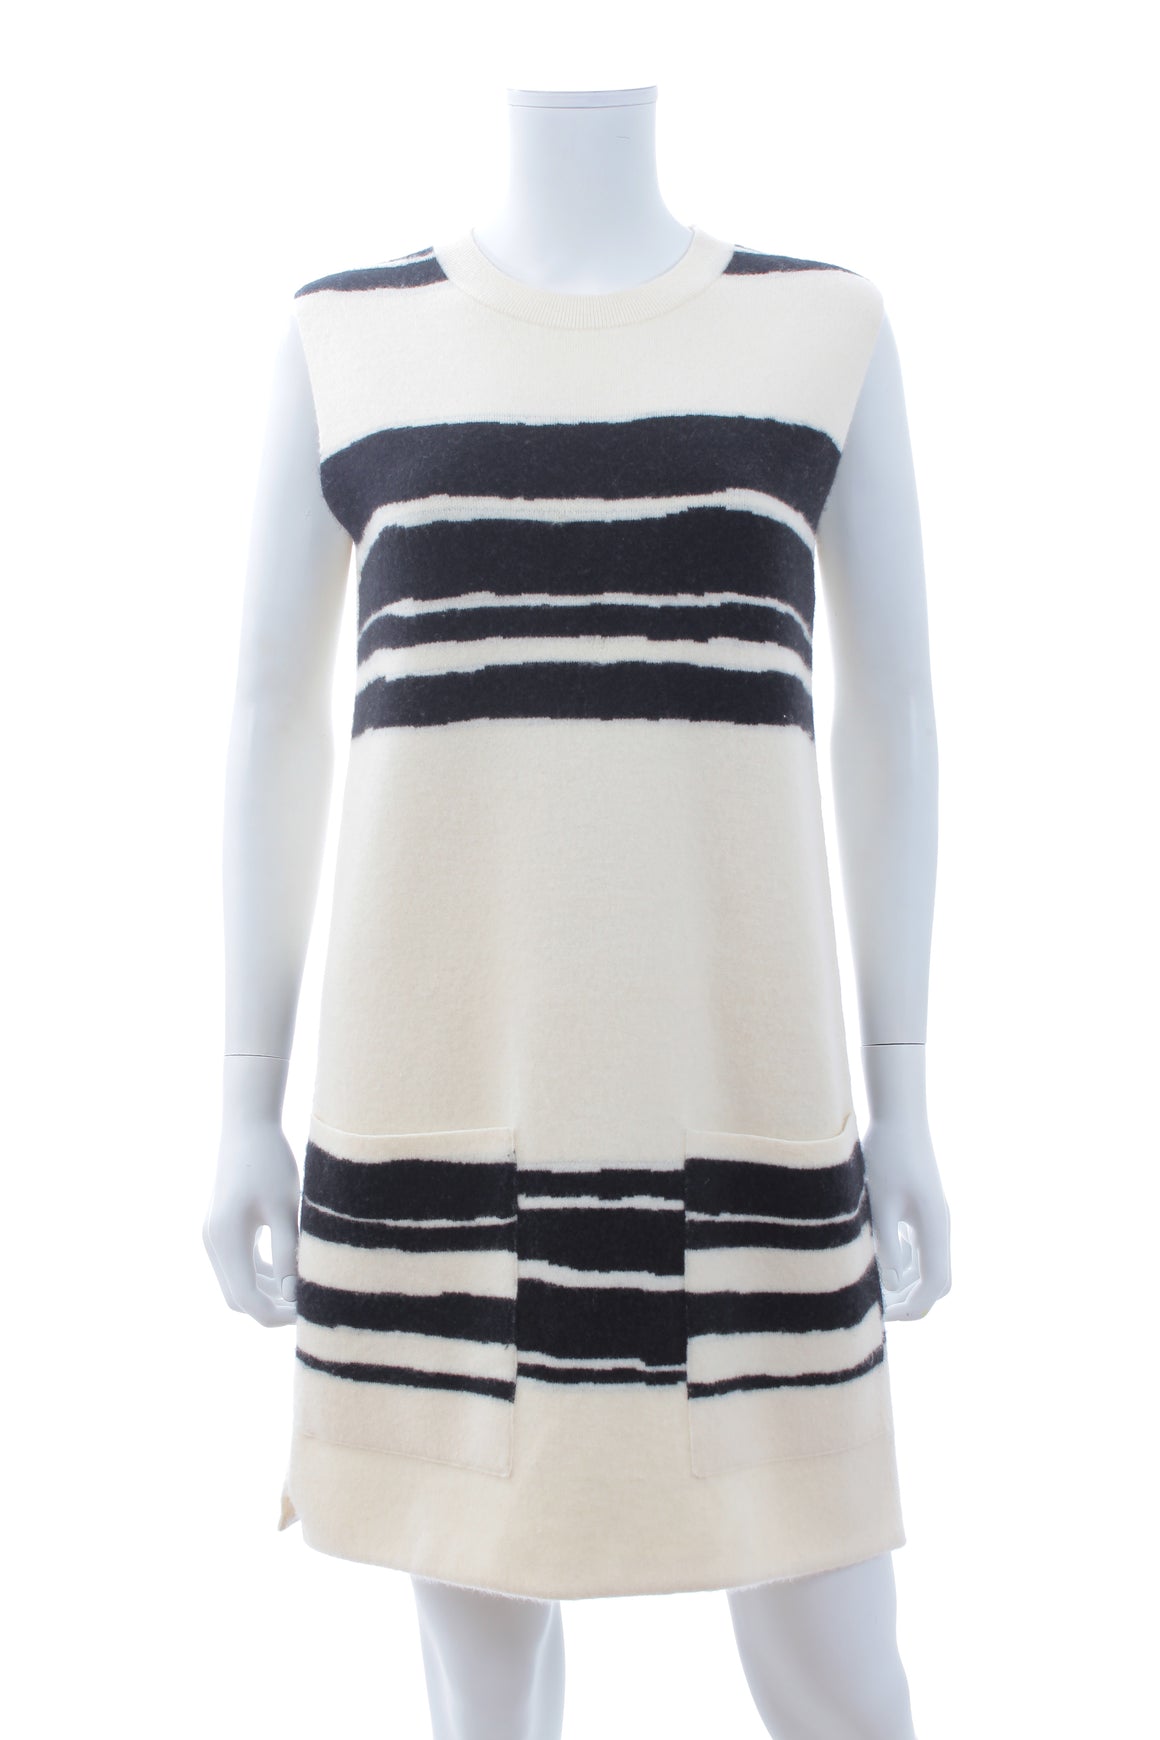 Proenza Schouler Wool and Cashmere-Blend Striped Knit Dress